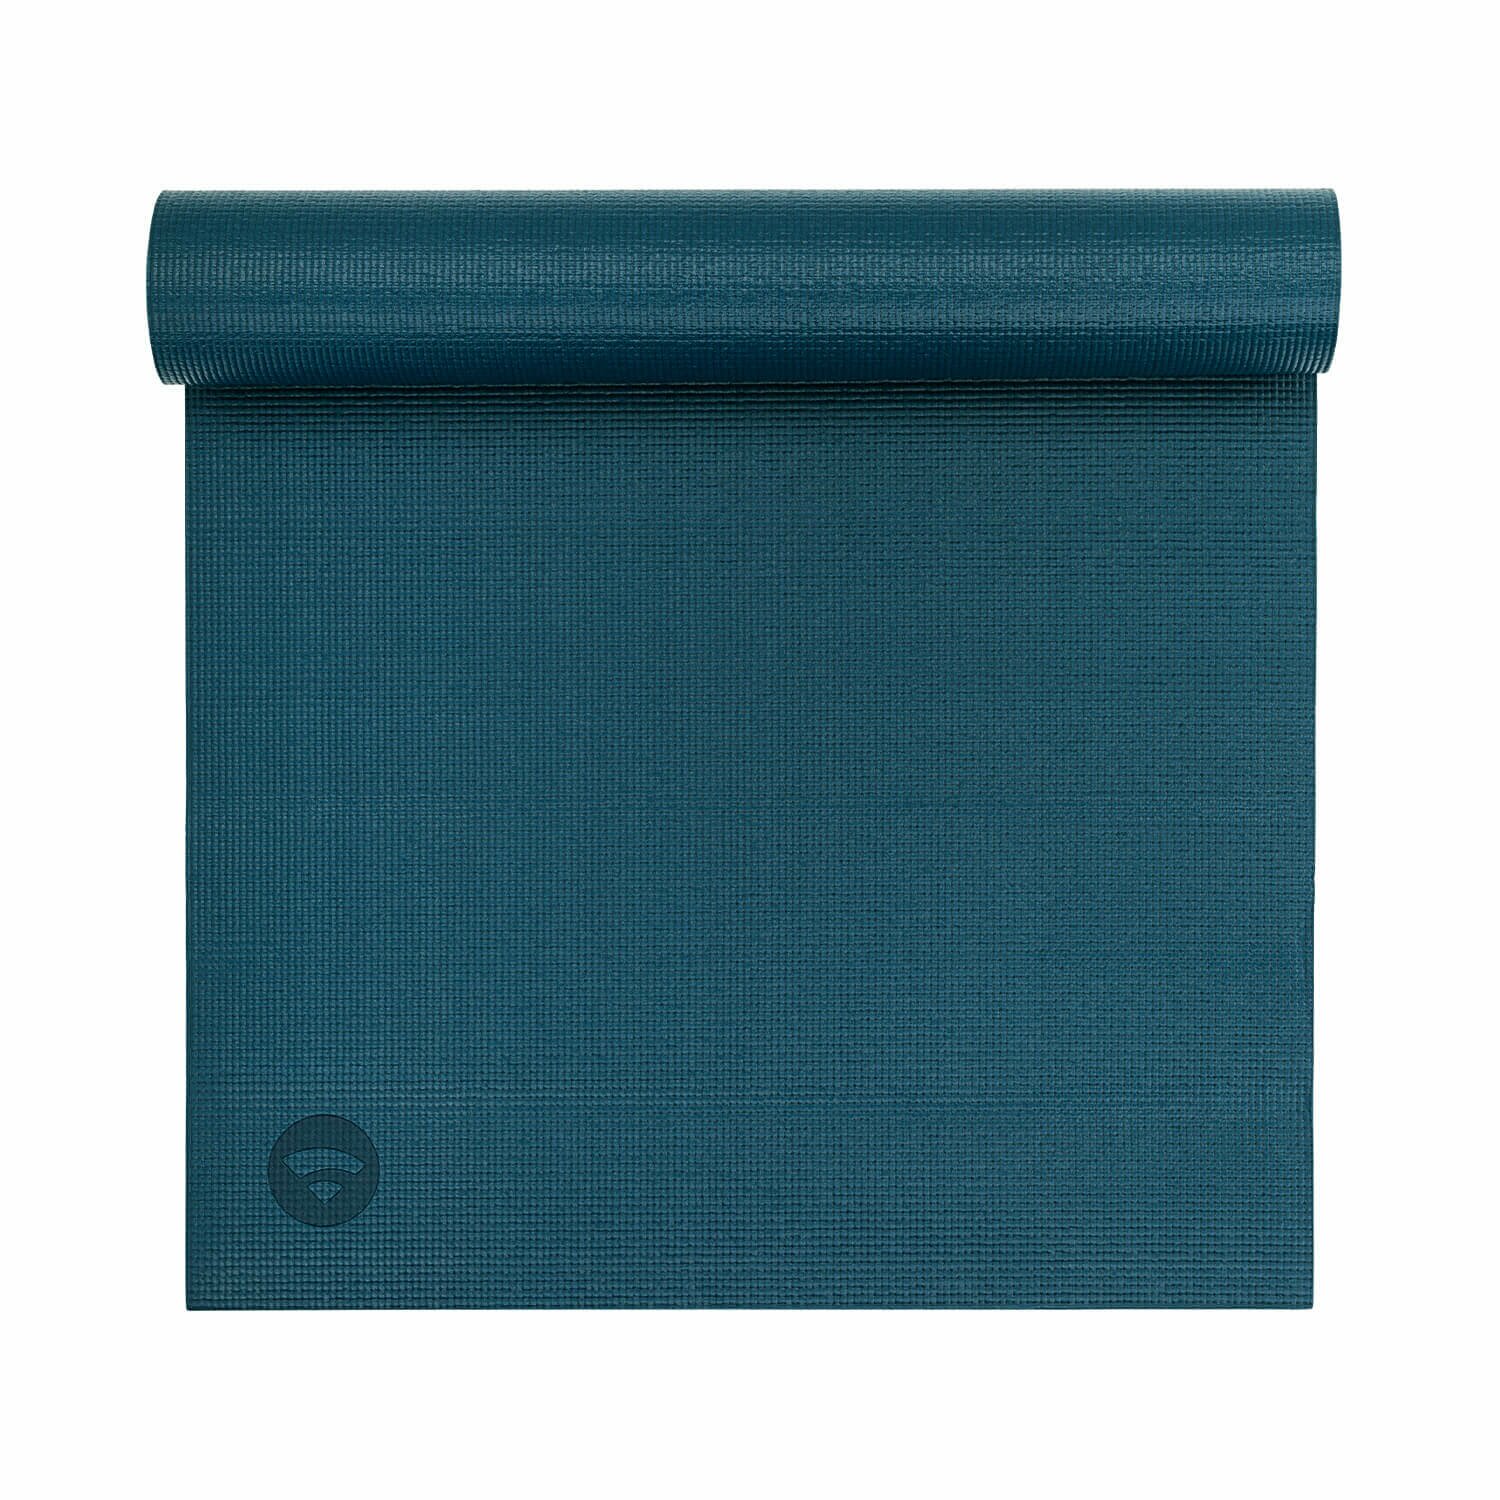 Tapete de yoga Asana - 4.5mm PVC ecológico 1